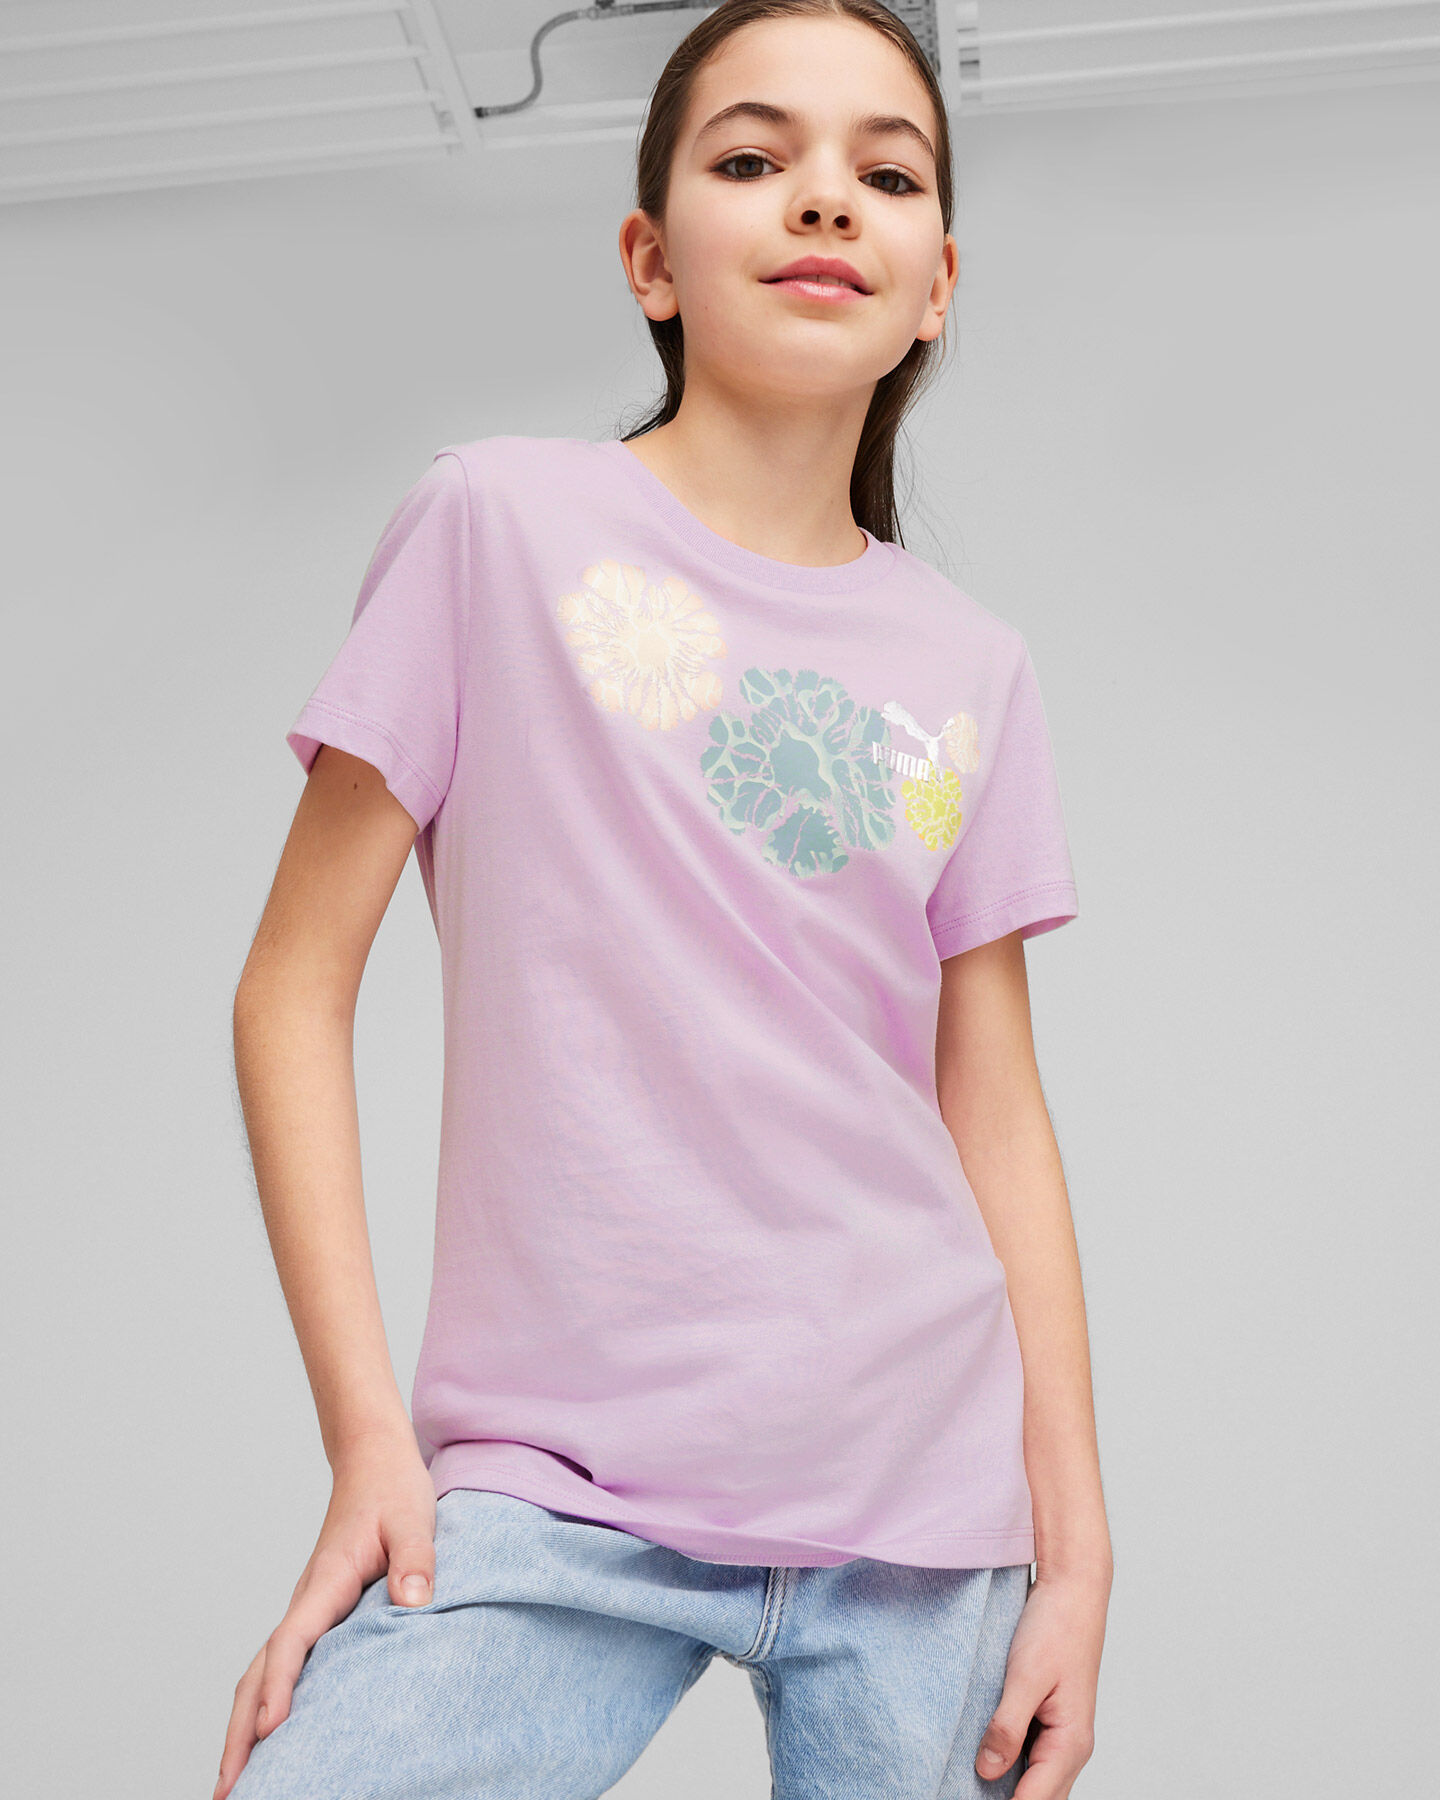  T-Shirt PUMA GIRL GRAPHIC JR S5662345|60|128 scatto 2